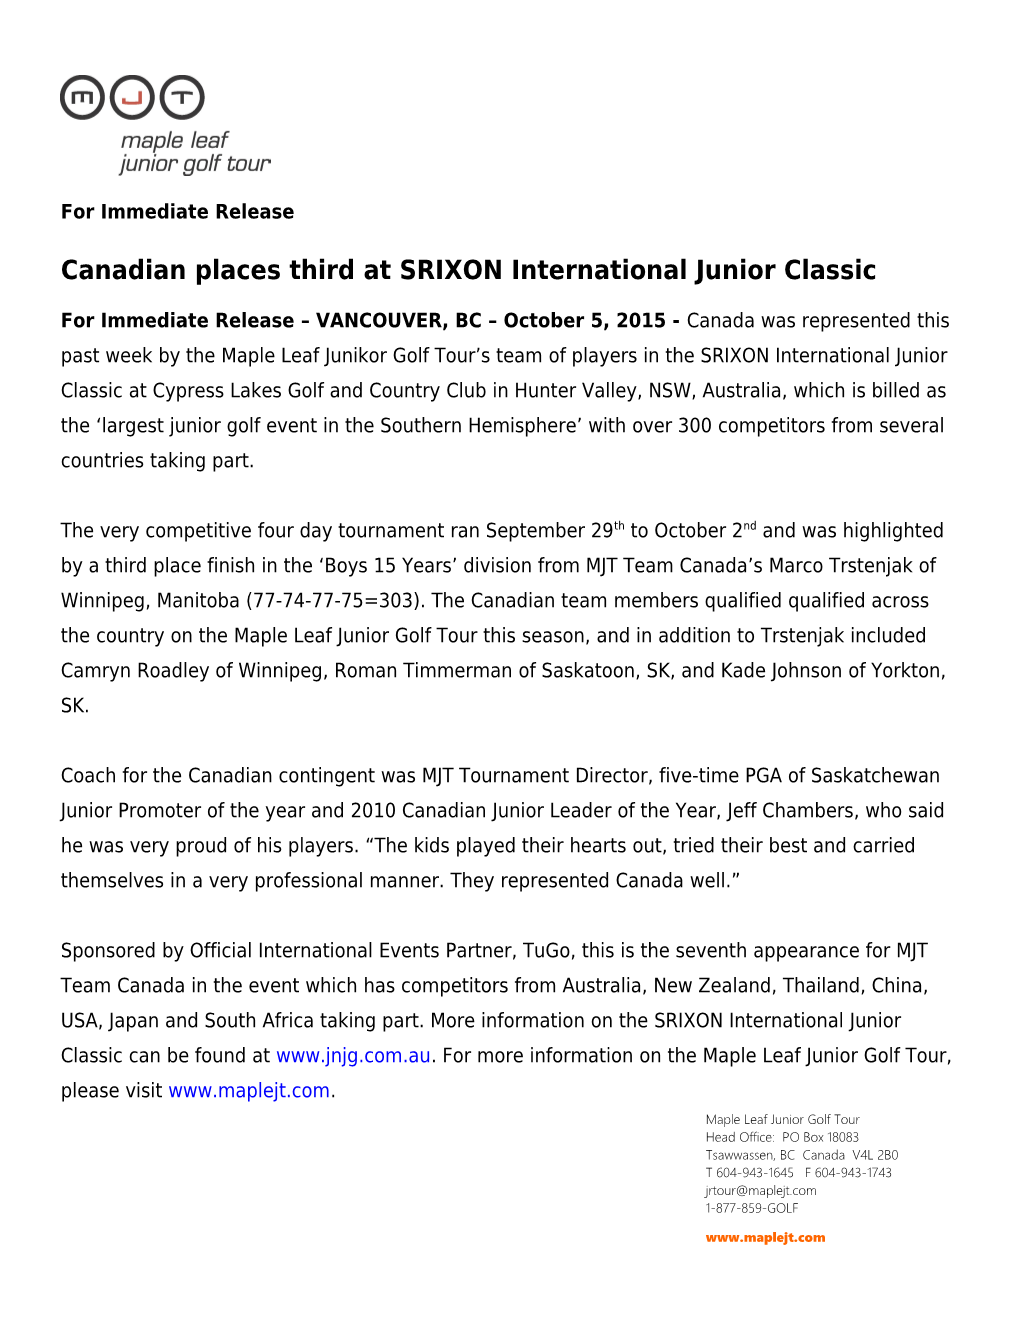 Canadian Placesthird at SRIXON International Junior Classic